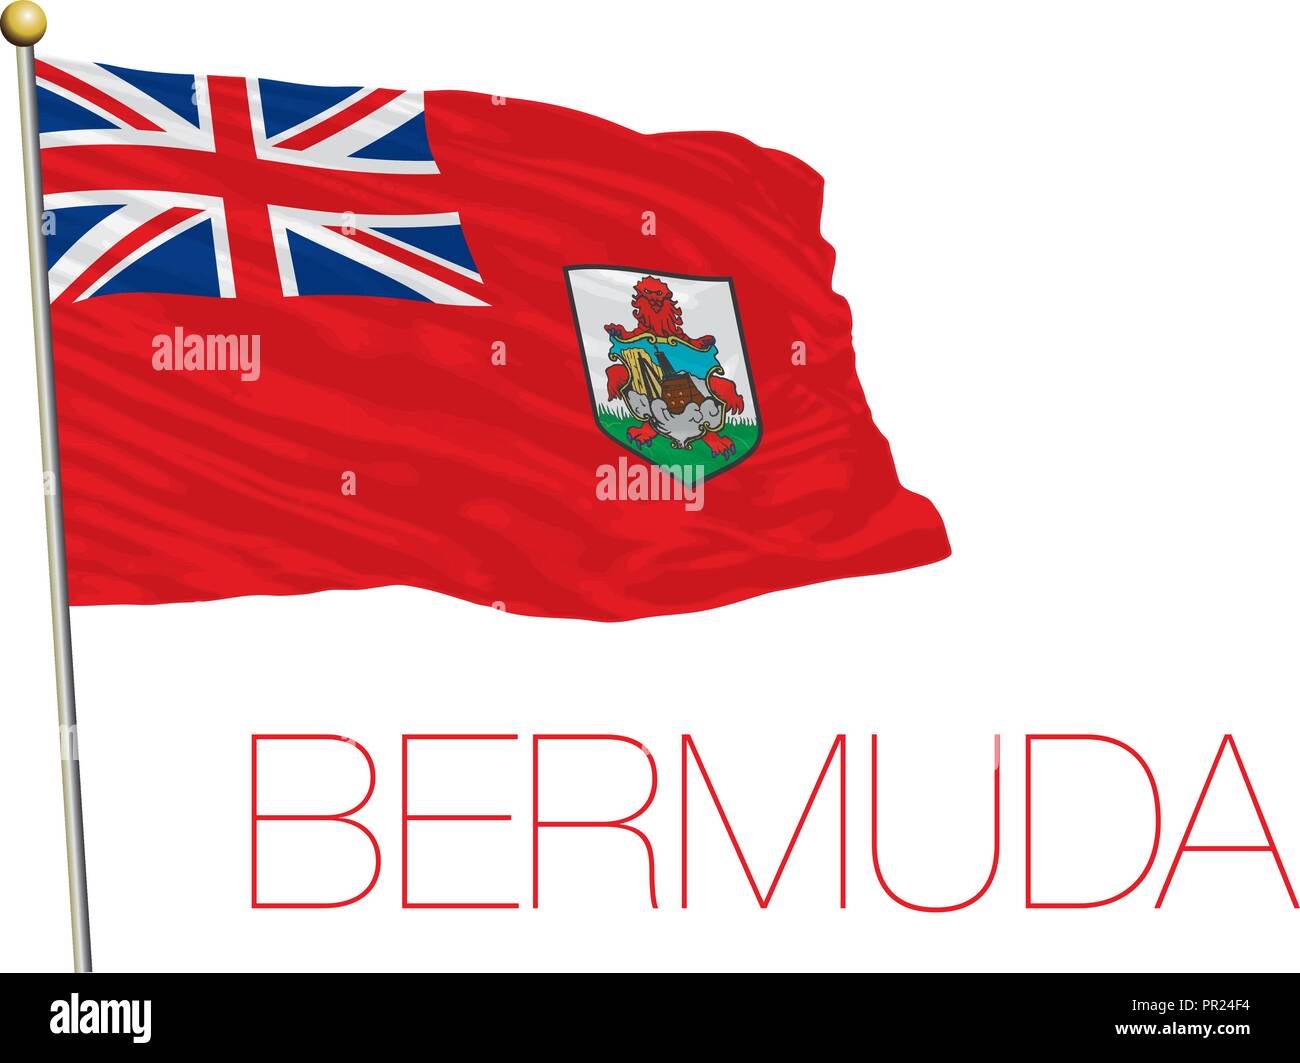 Bermuda flag, vector illustration Stock Vector